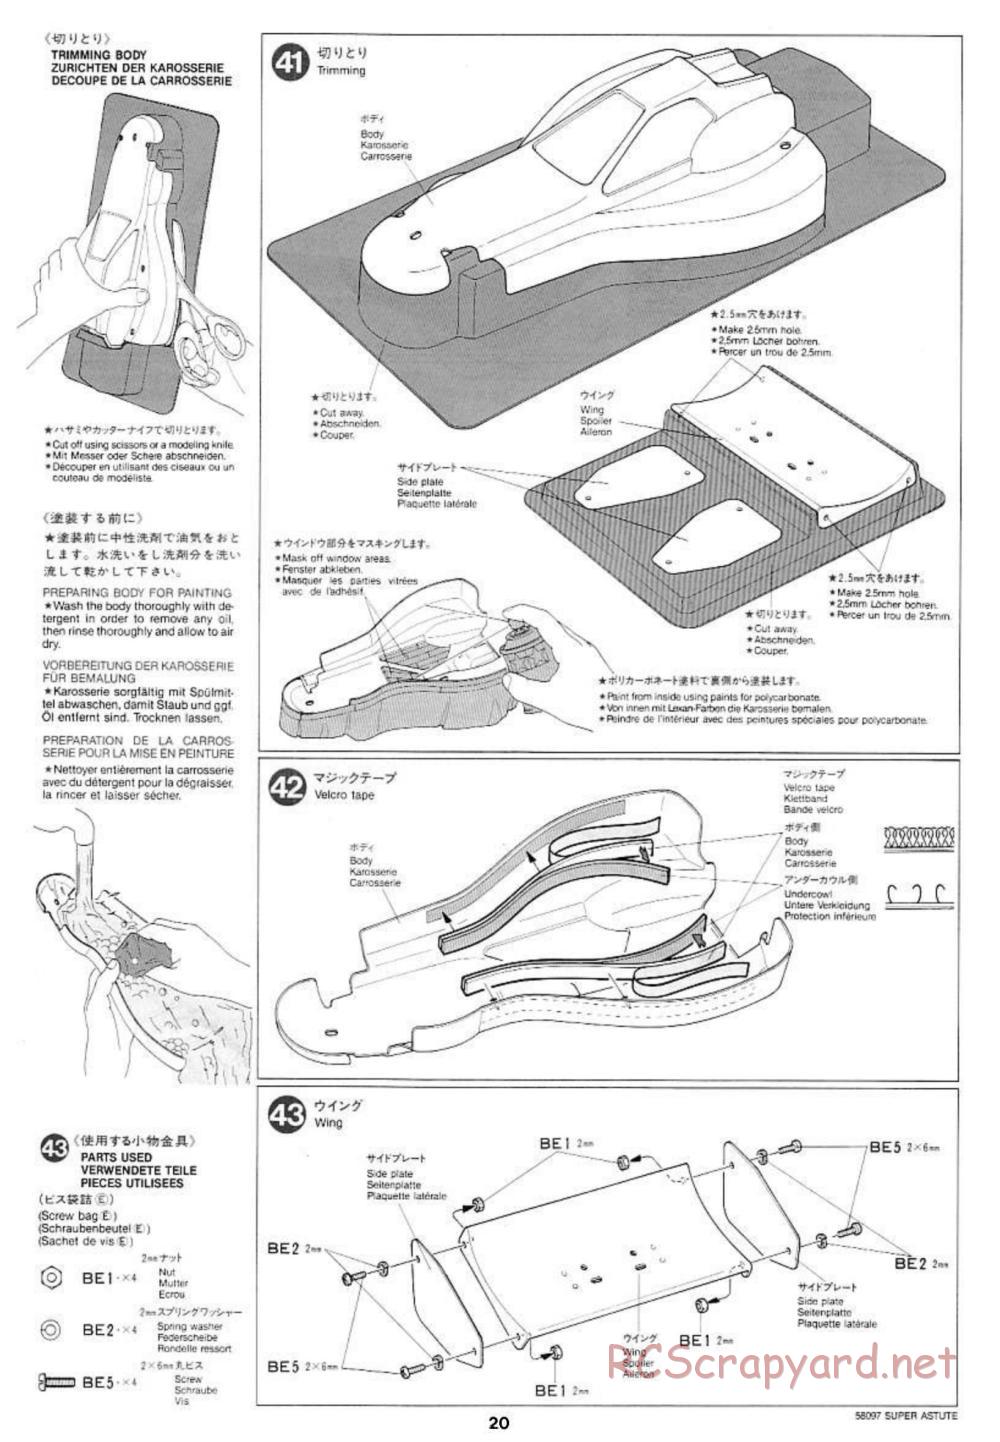 Tamiya - Super Astute - 58097 - Manual - Page 20